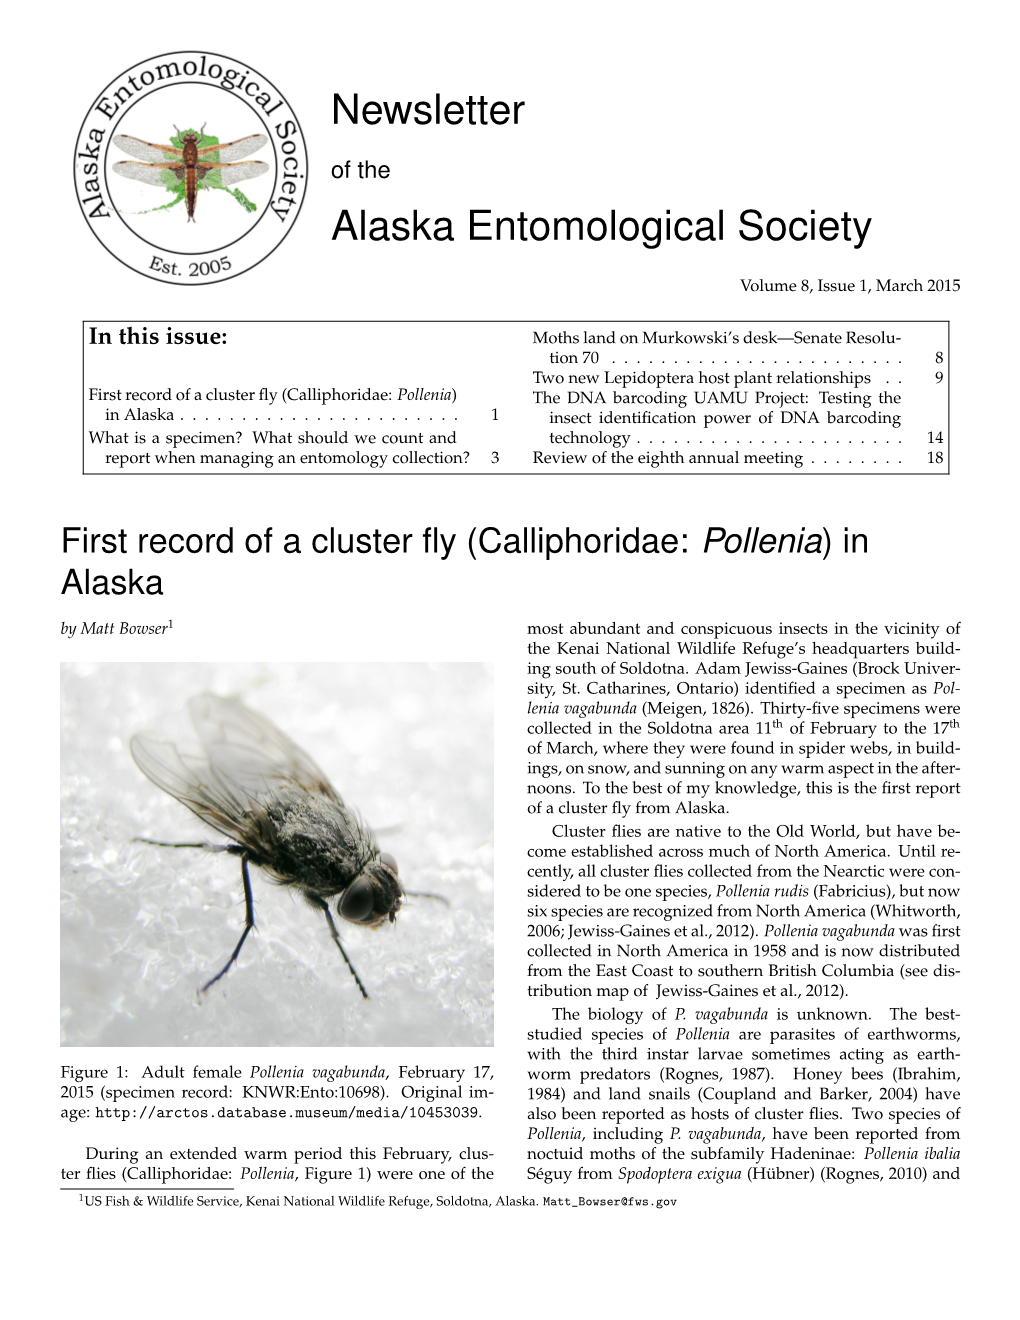 Newsletter Alaska Entomological Society